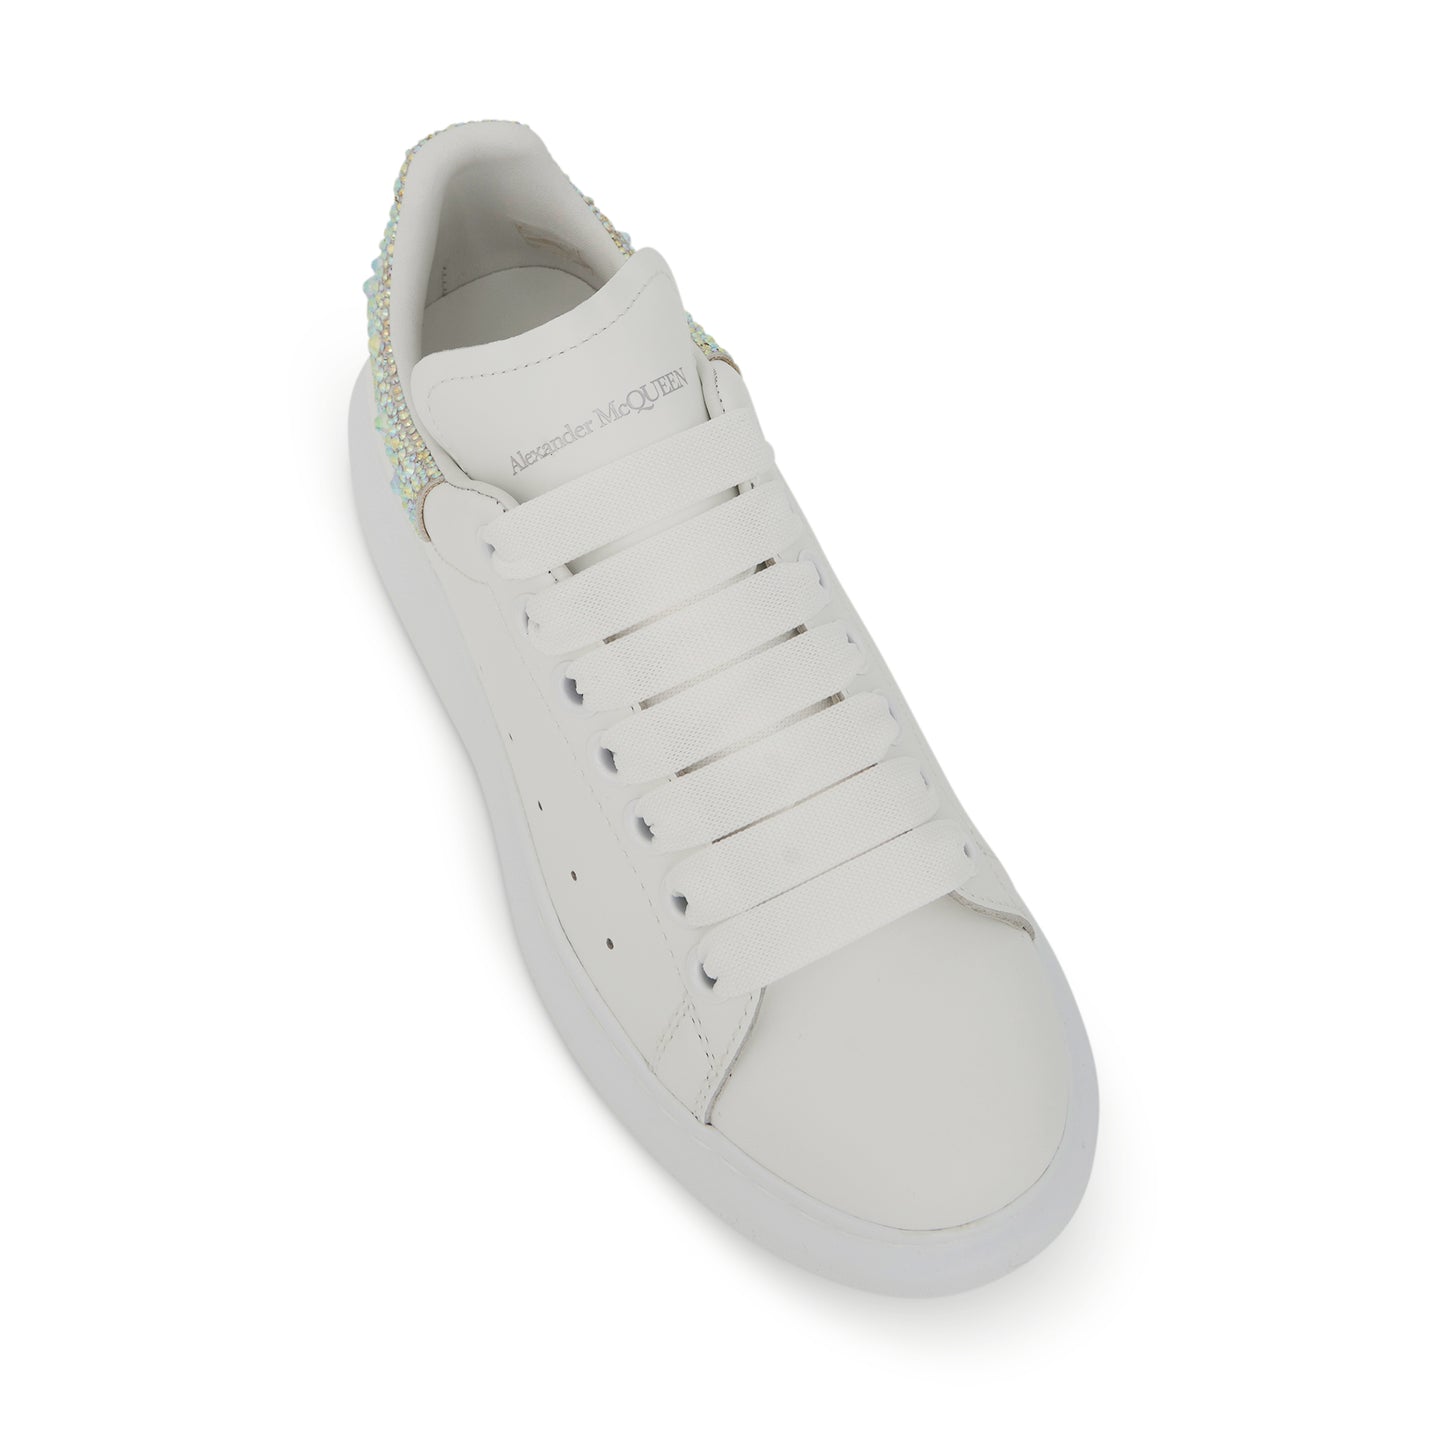 Larry Oversized Heel Sneaker in White/Crystal